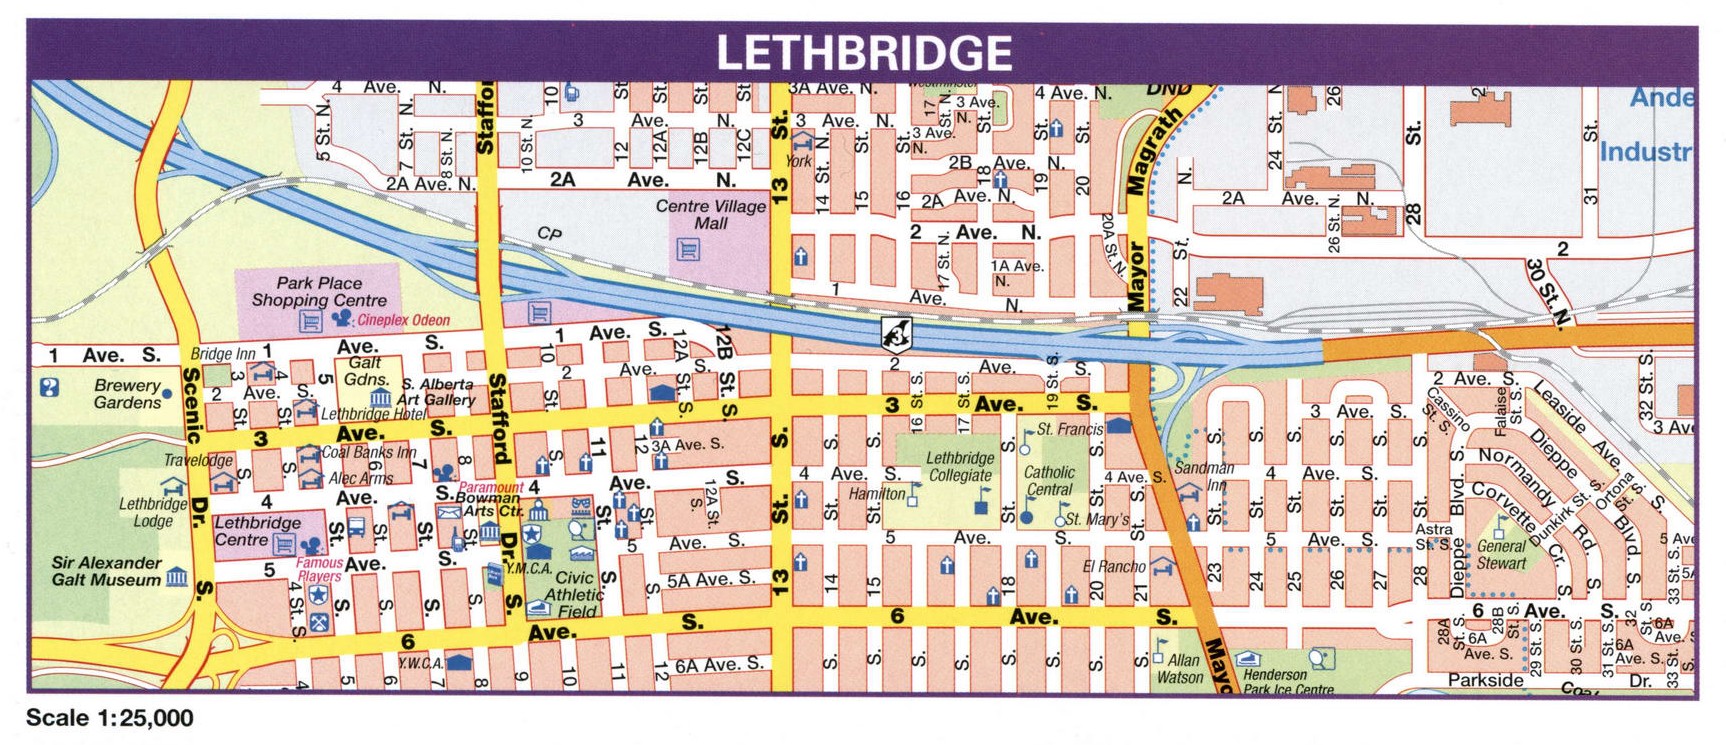 LethBridge city map